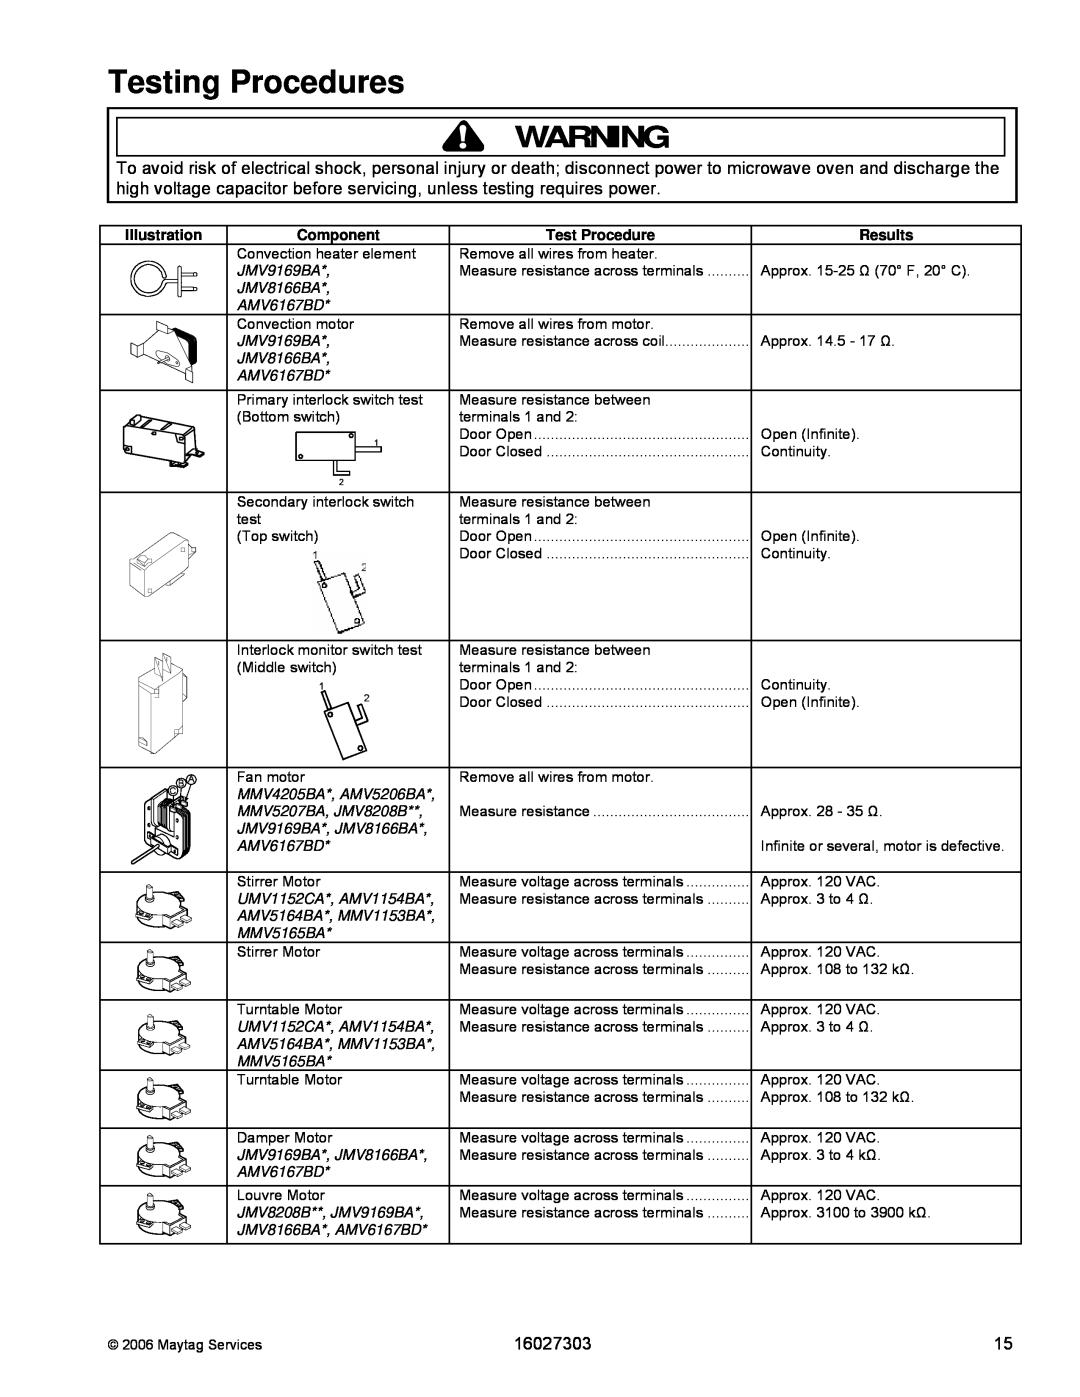 Maytag UMV1152CA manual Testing Procedures, 16027303, Illustration, Component, Test Procedure, Results 